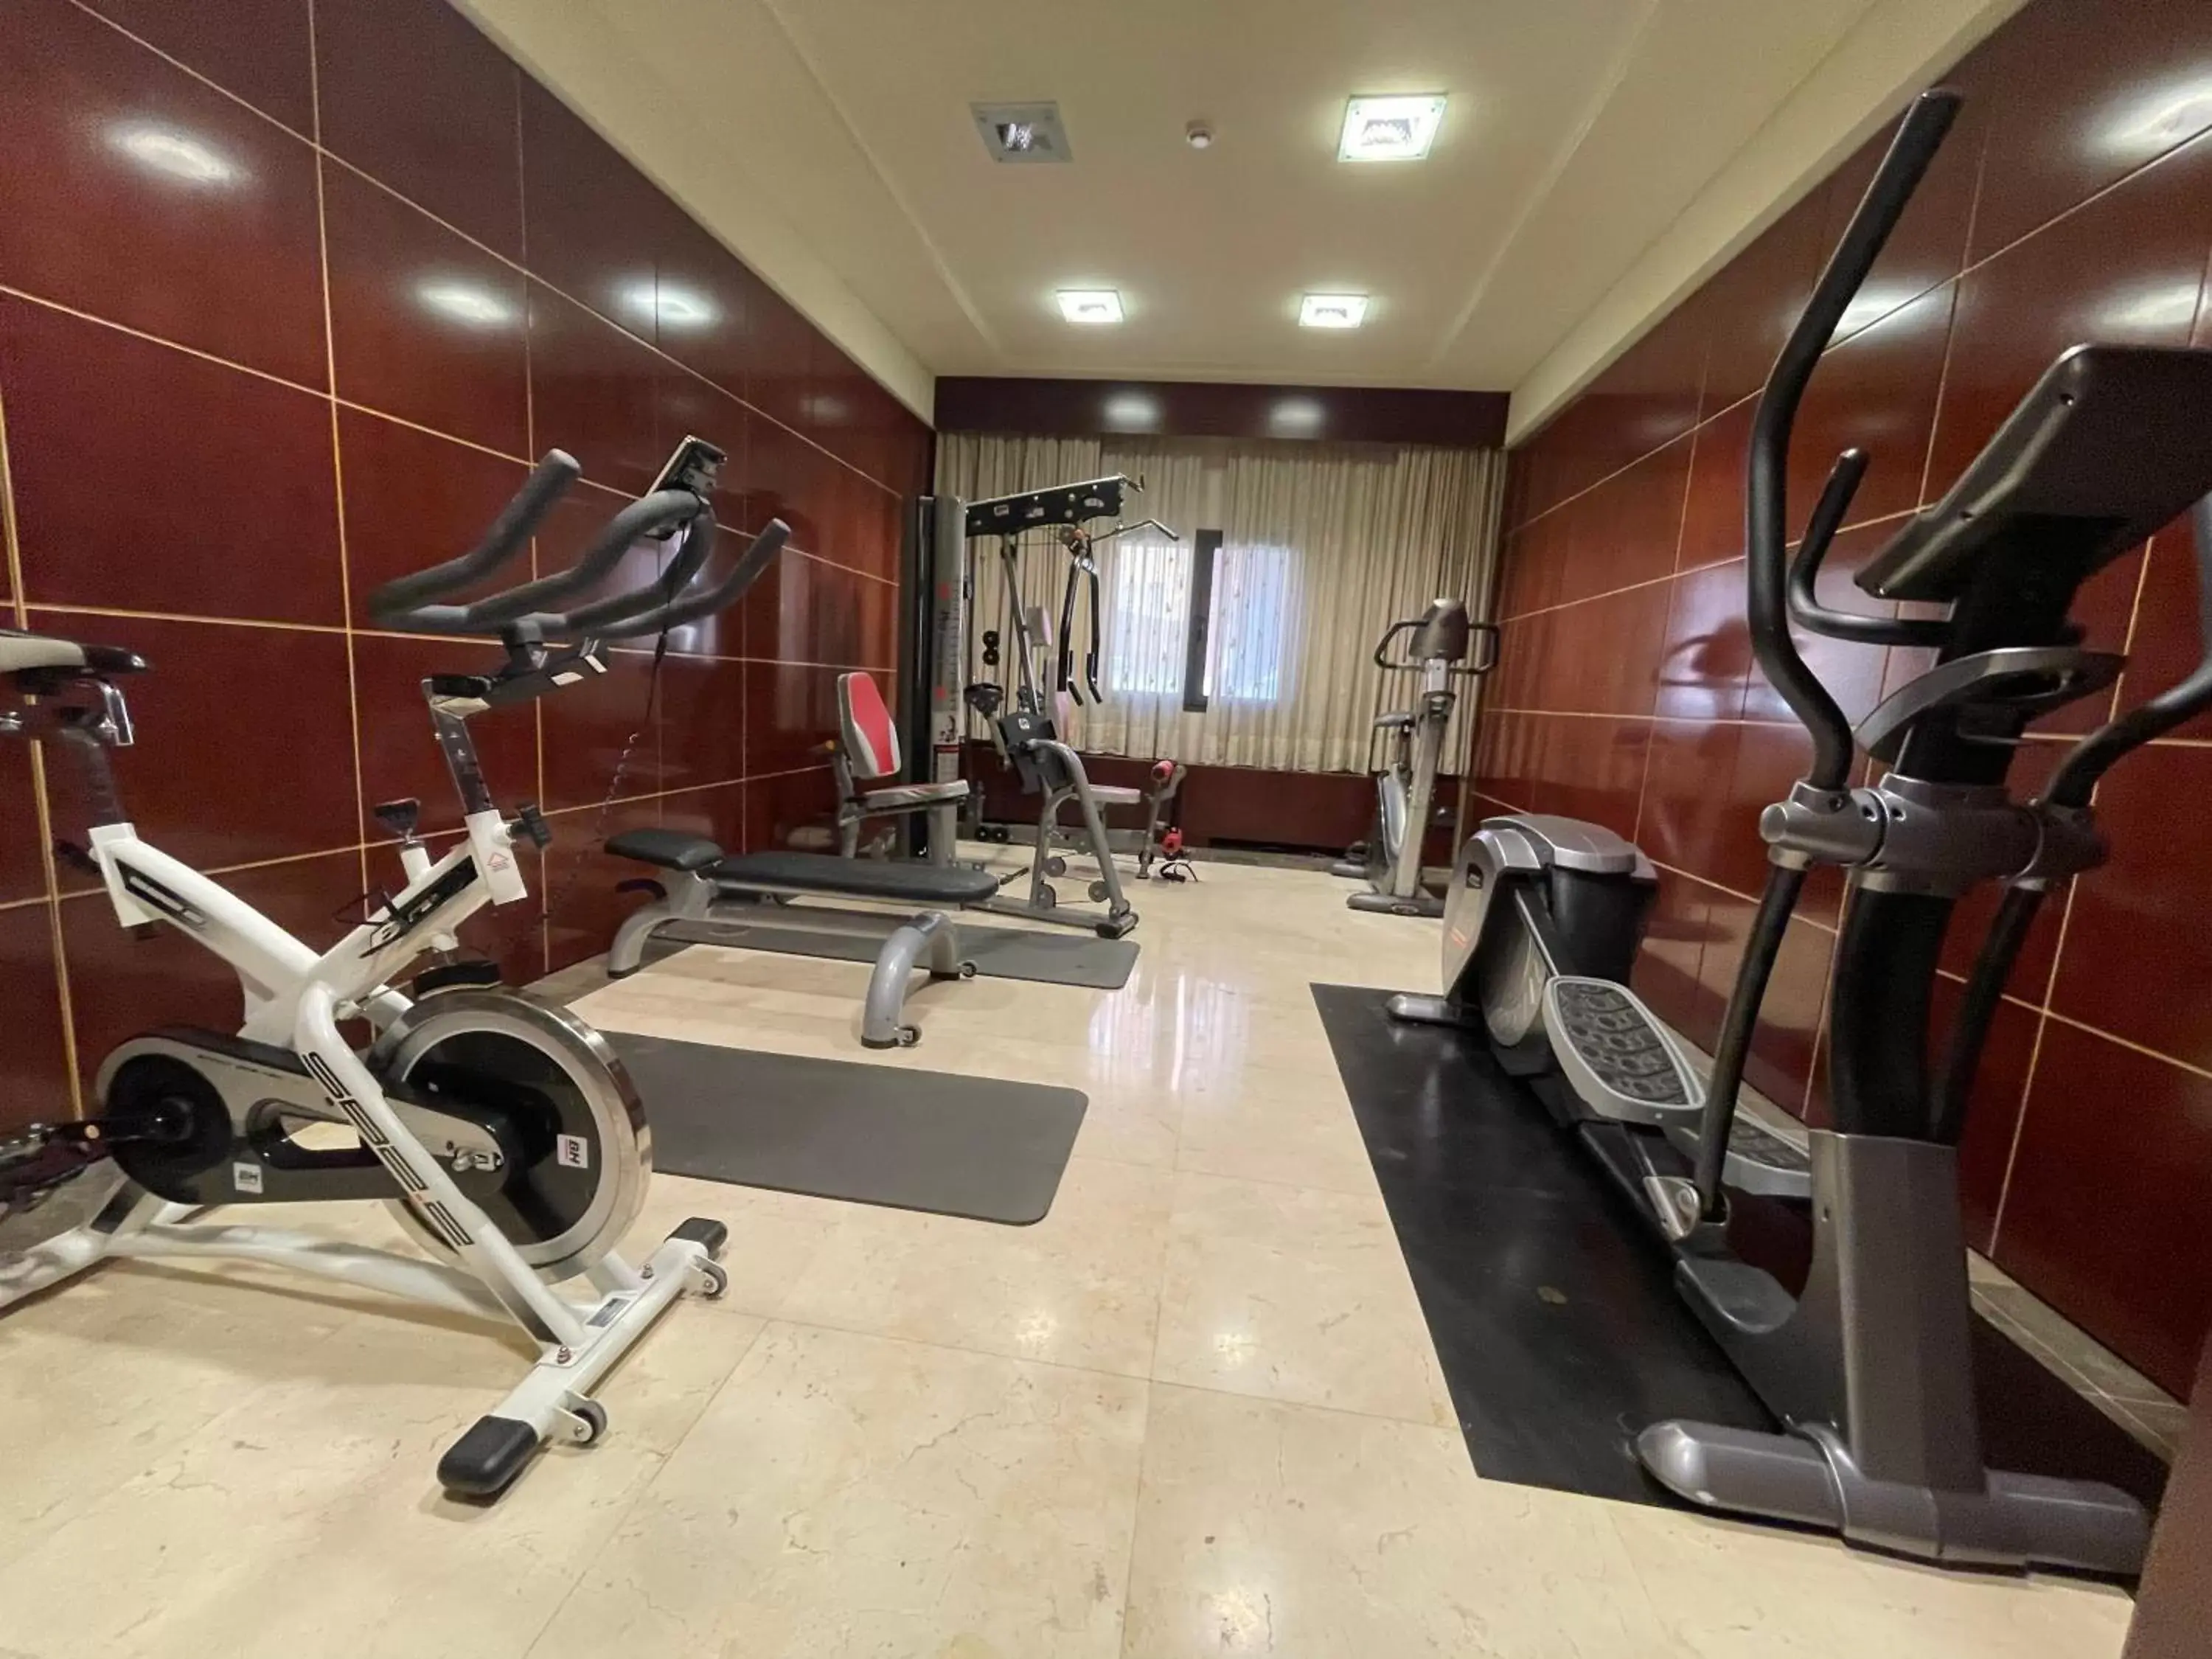 Fitness centre/facilities, Fitness Center/Facilities in Hotel Badajoz Center